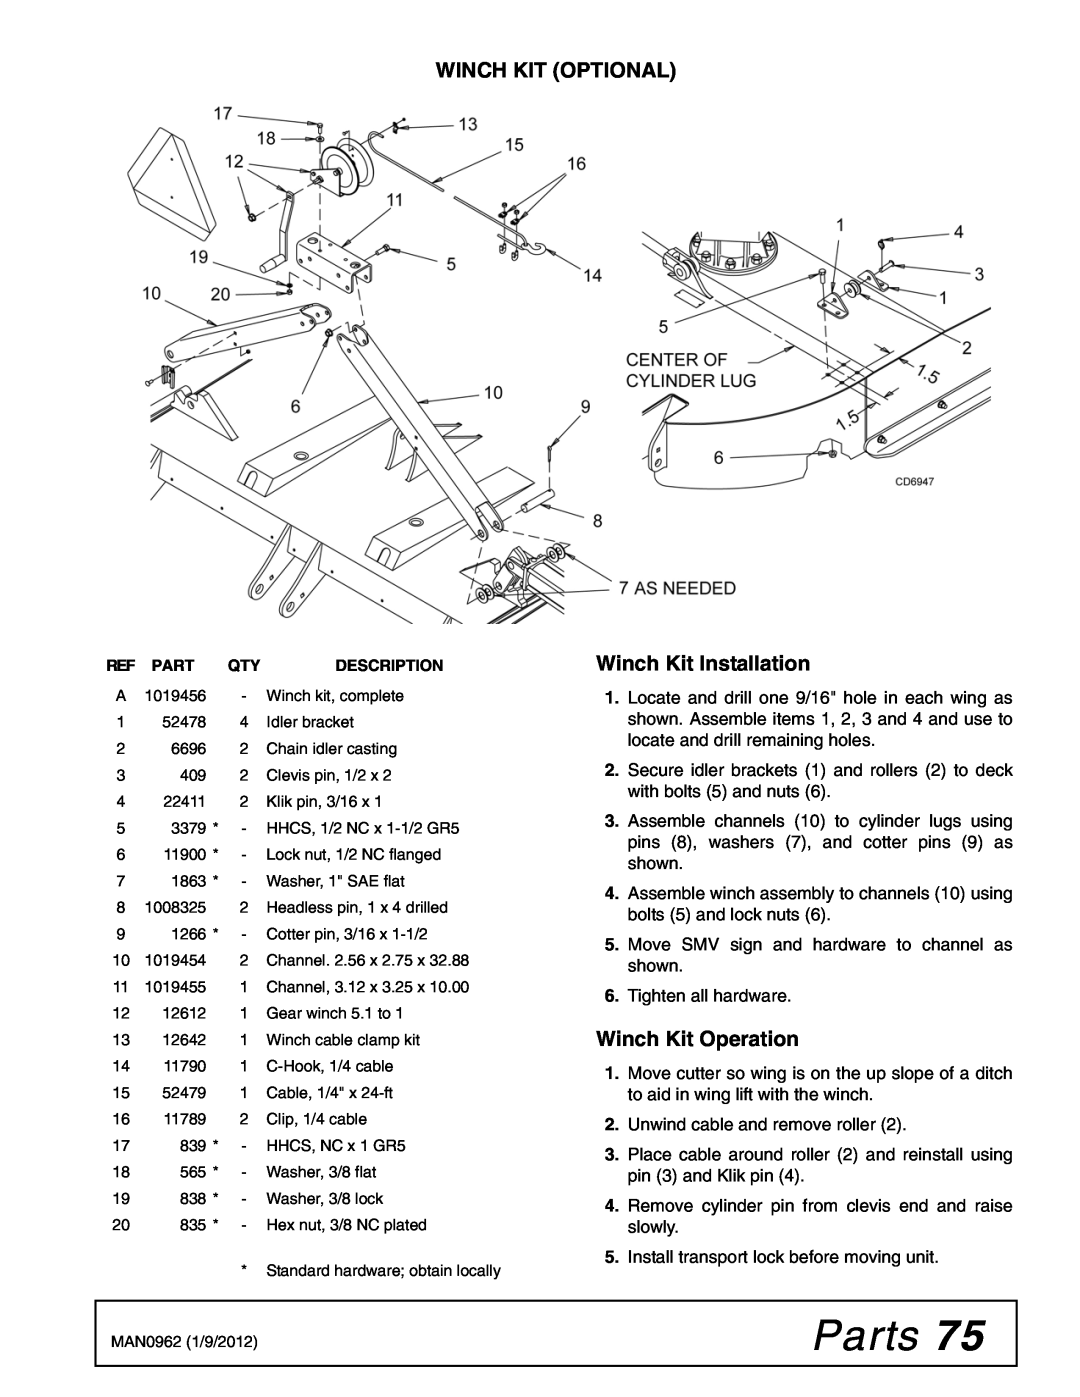 Woods Equipment BW180XQ, BW126XQ manual Parts, Winch Kit Optional, Winch Kit Installation, Winch Kit Operation 